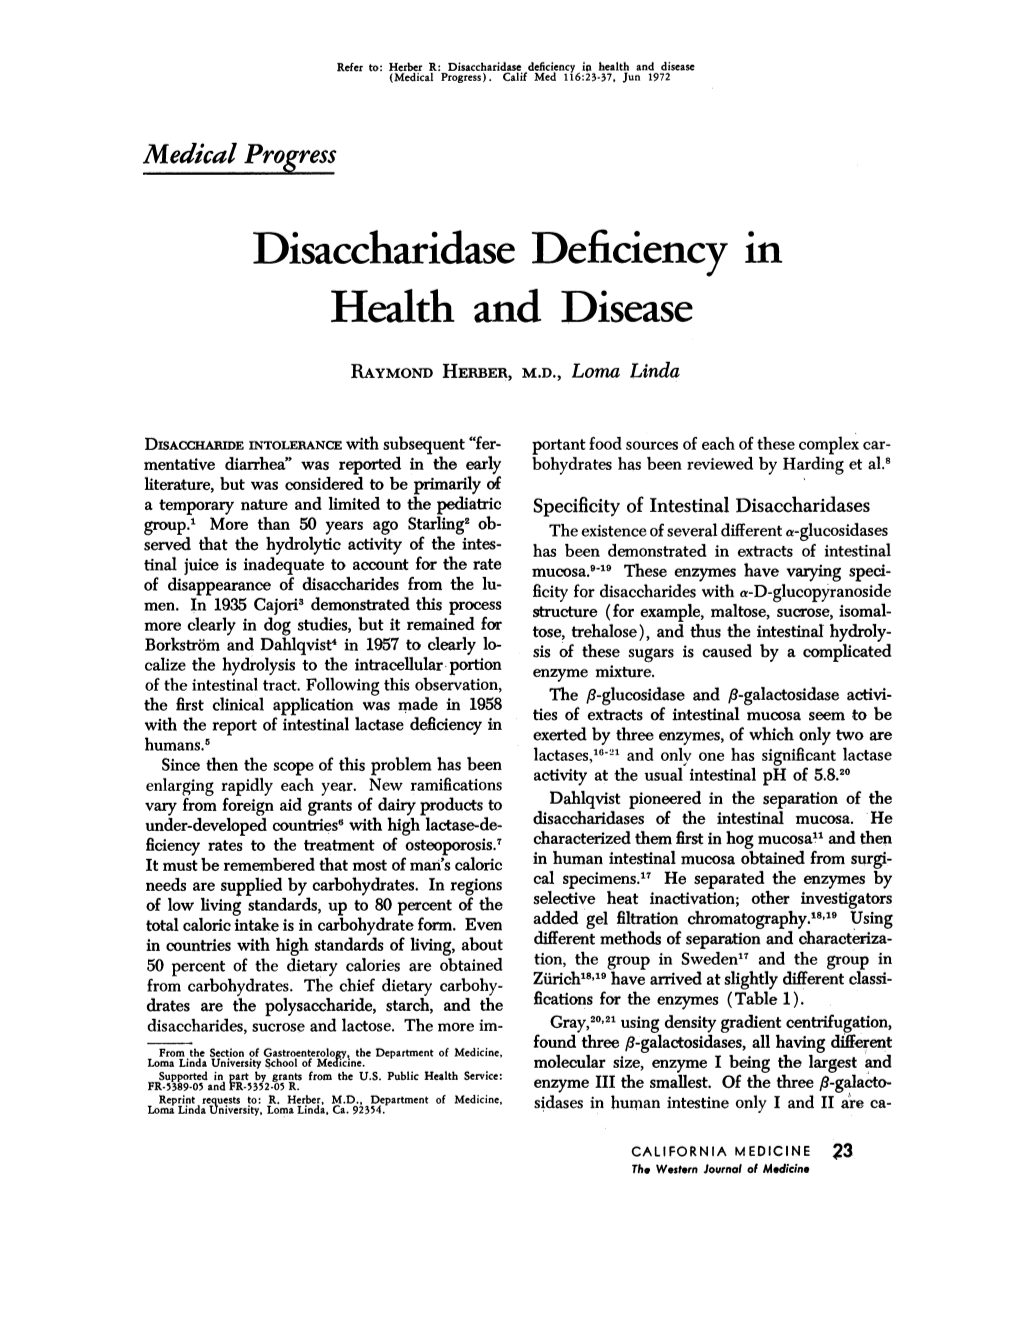 Disaccharidase Deficiency in Health and Disease (Medical Progress)